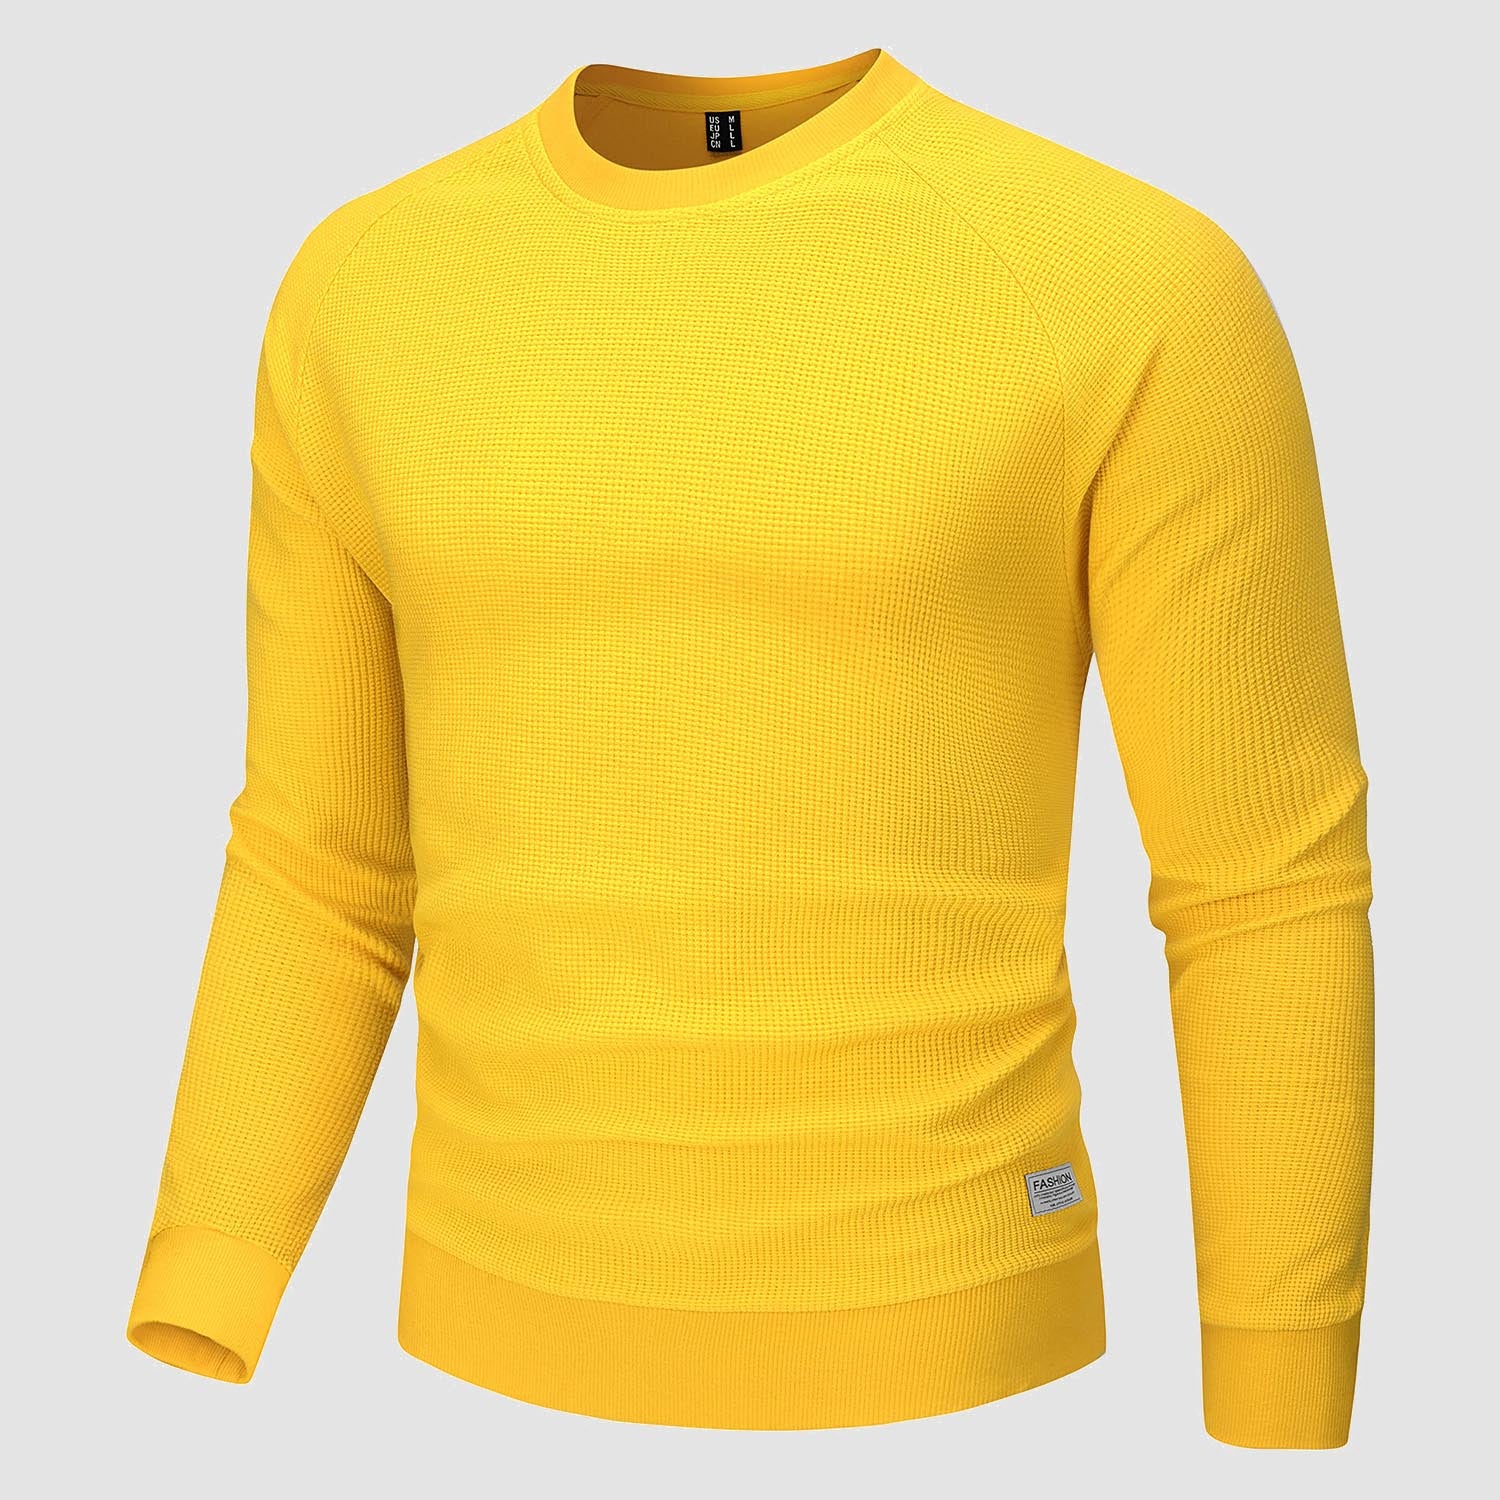 Men's Crewneck Sweatshirts Waffle Knit Pullover T-shirt